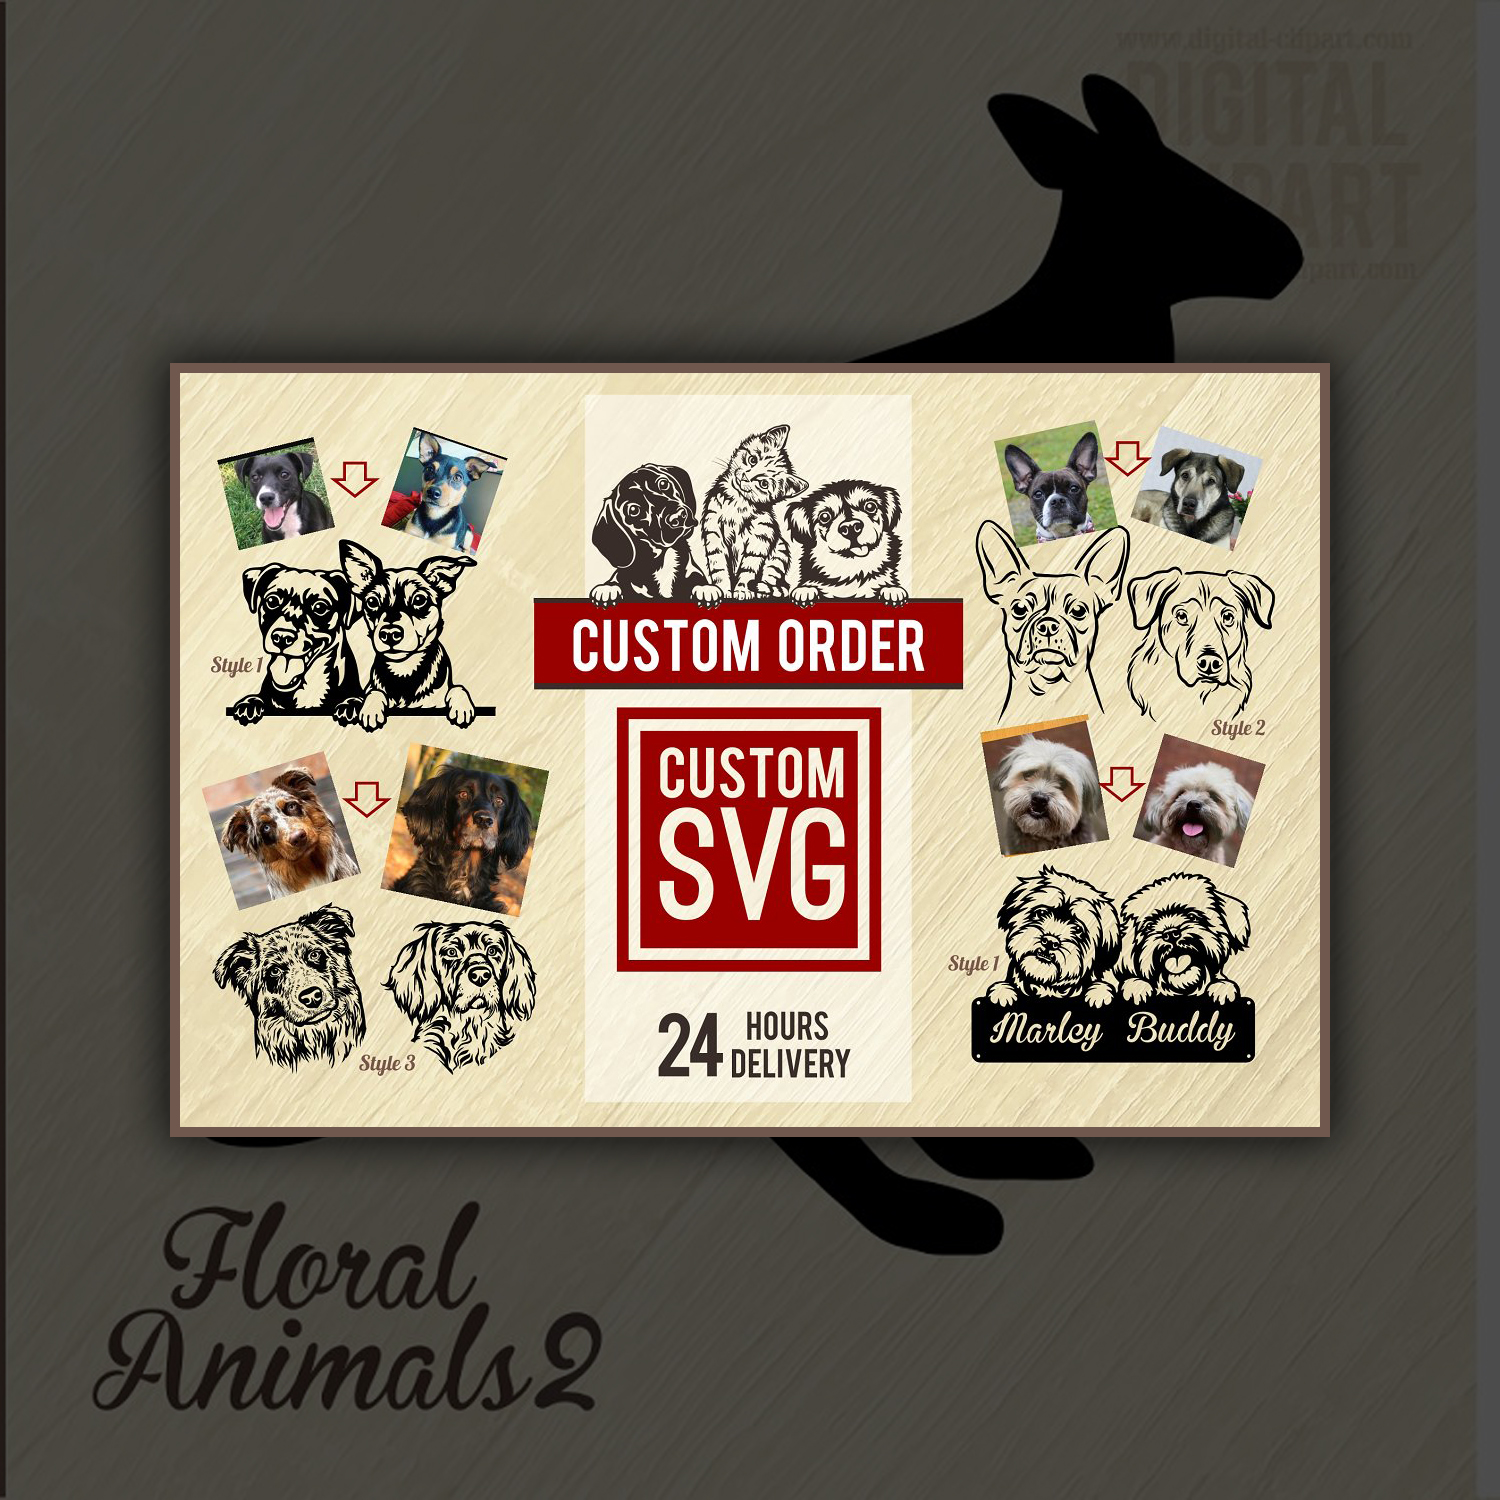 Kangaroo SVG Floral Animals Design cover image.